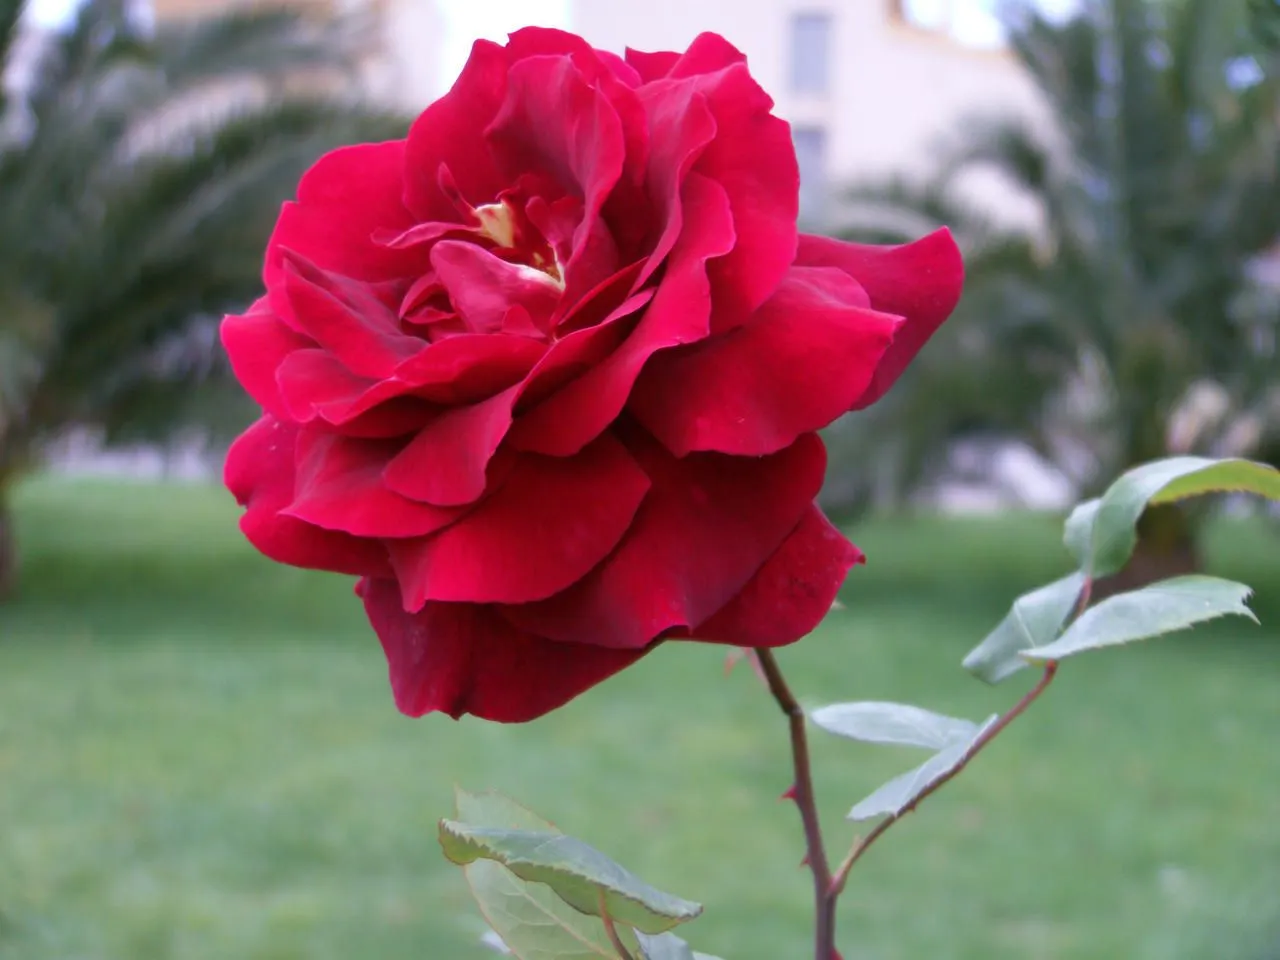 rosa flor 1 by spirit-warri0r on DeviantArt